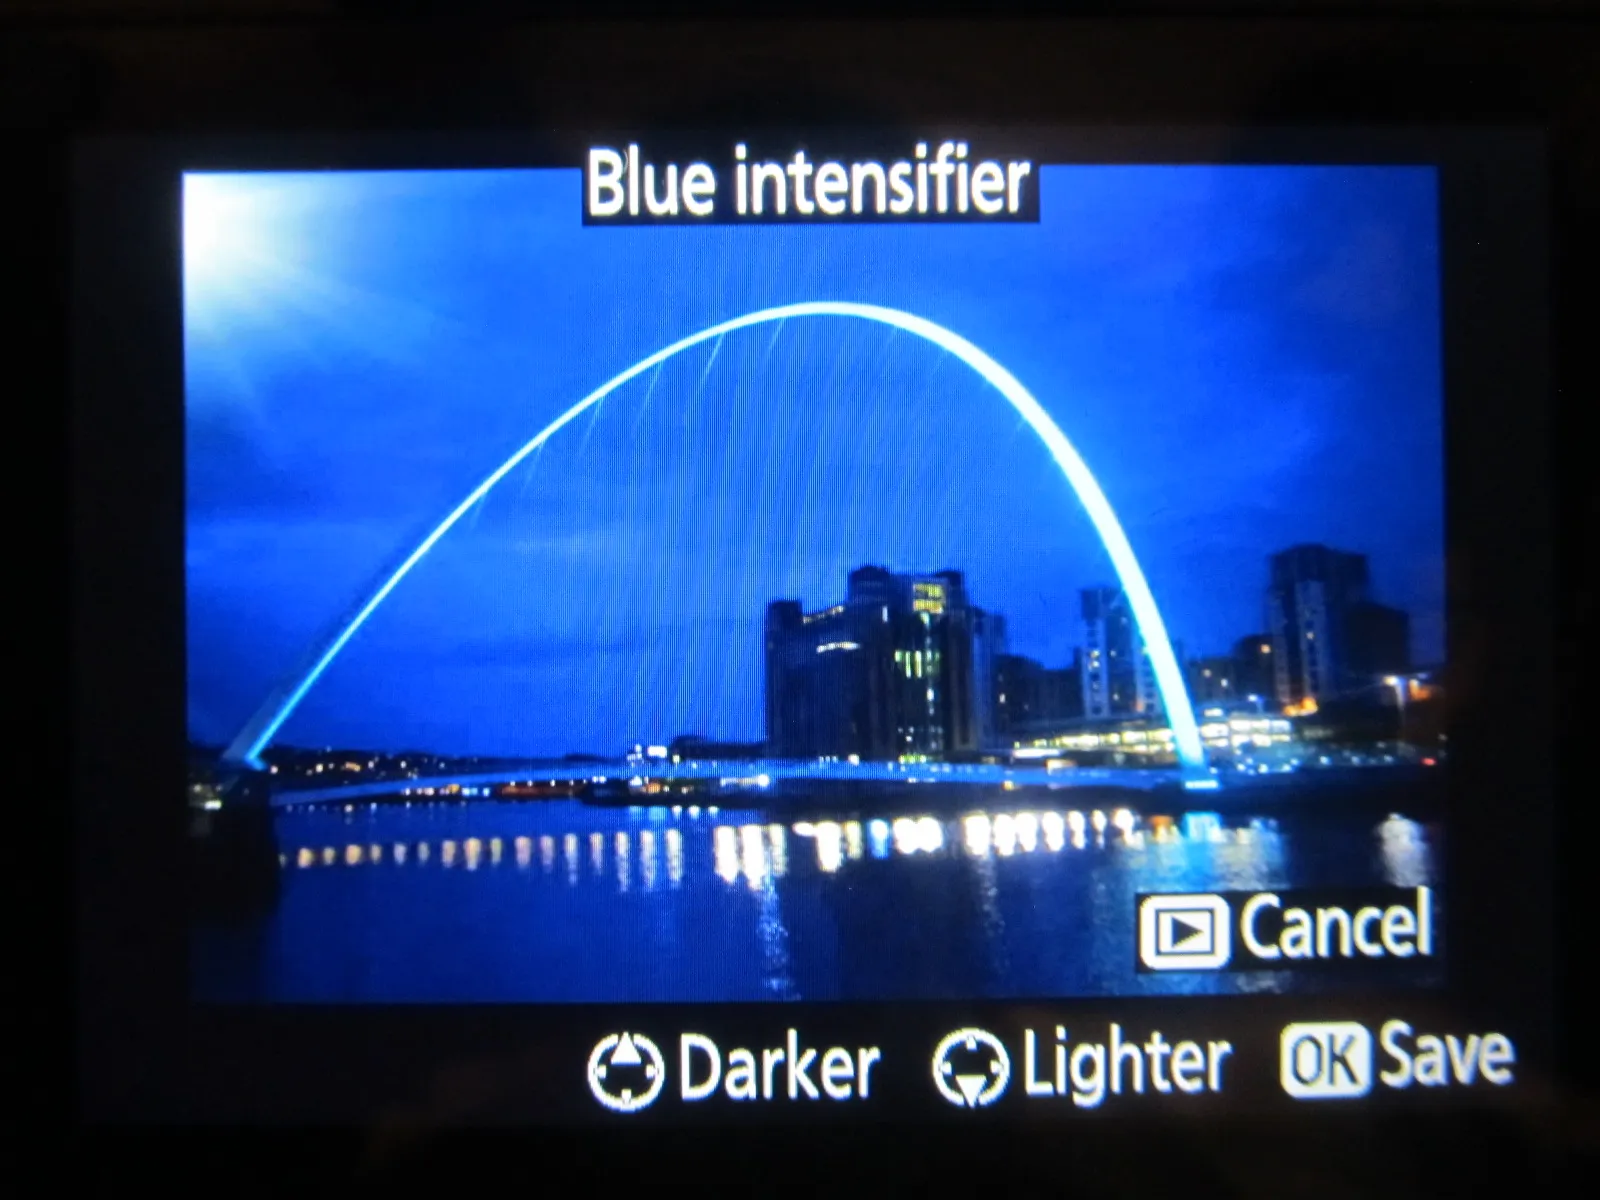 Nikon D5300 blue intensifier options